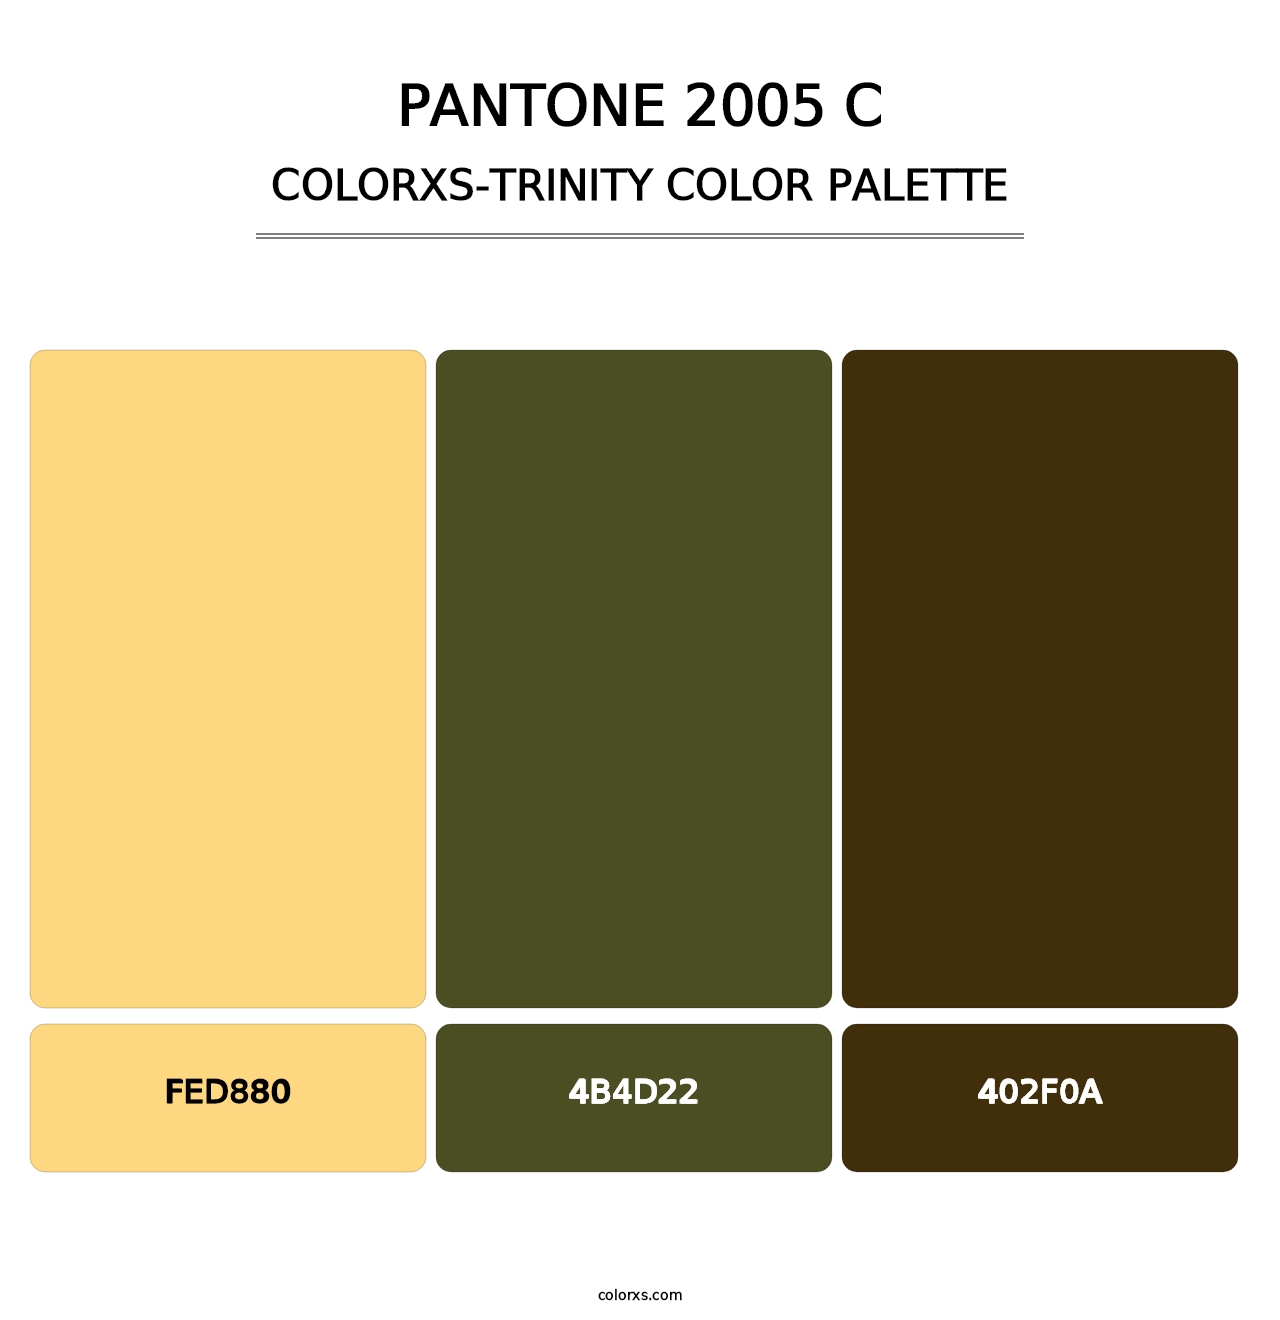 PANTONE 2005 C - Colorxs Trinity Palette